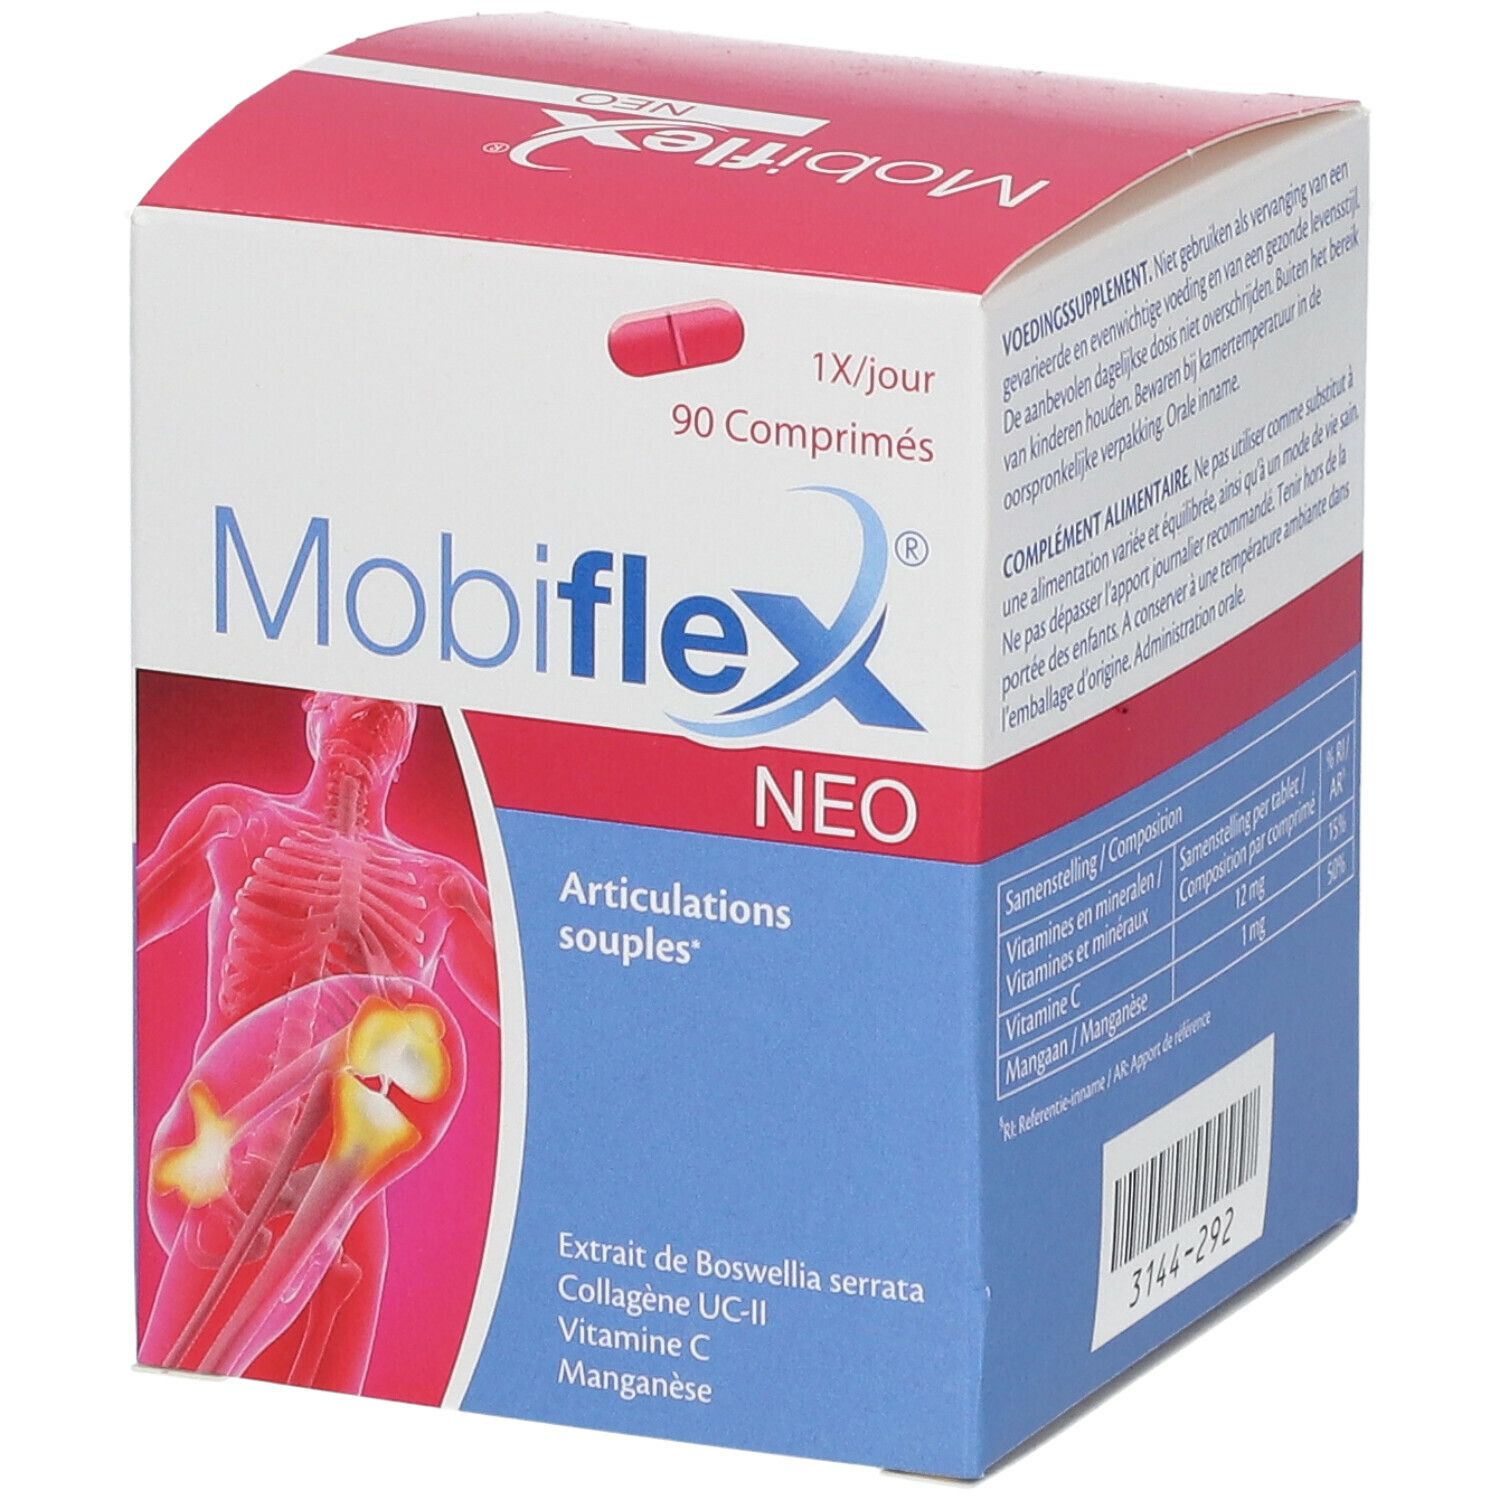 Mobiflex Neo